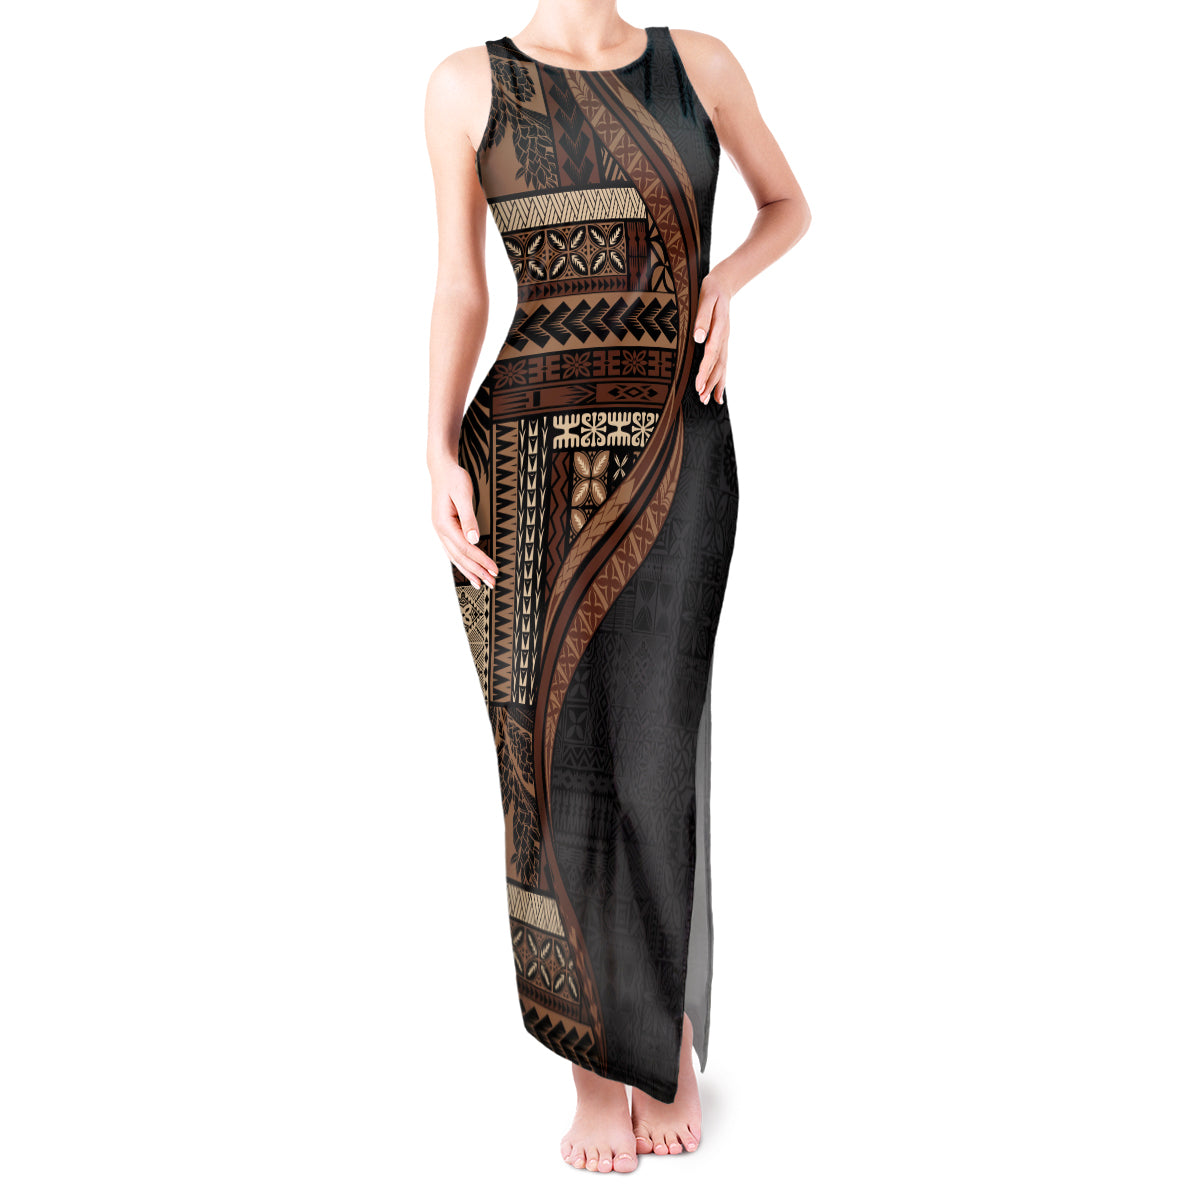 Samoa Siapo Motif and Tapa Pattern Half Style Tank Maxi Dress Black Color